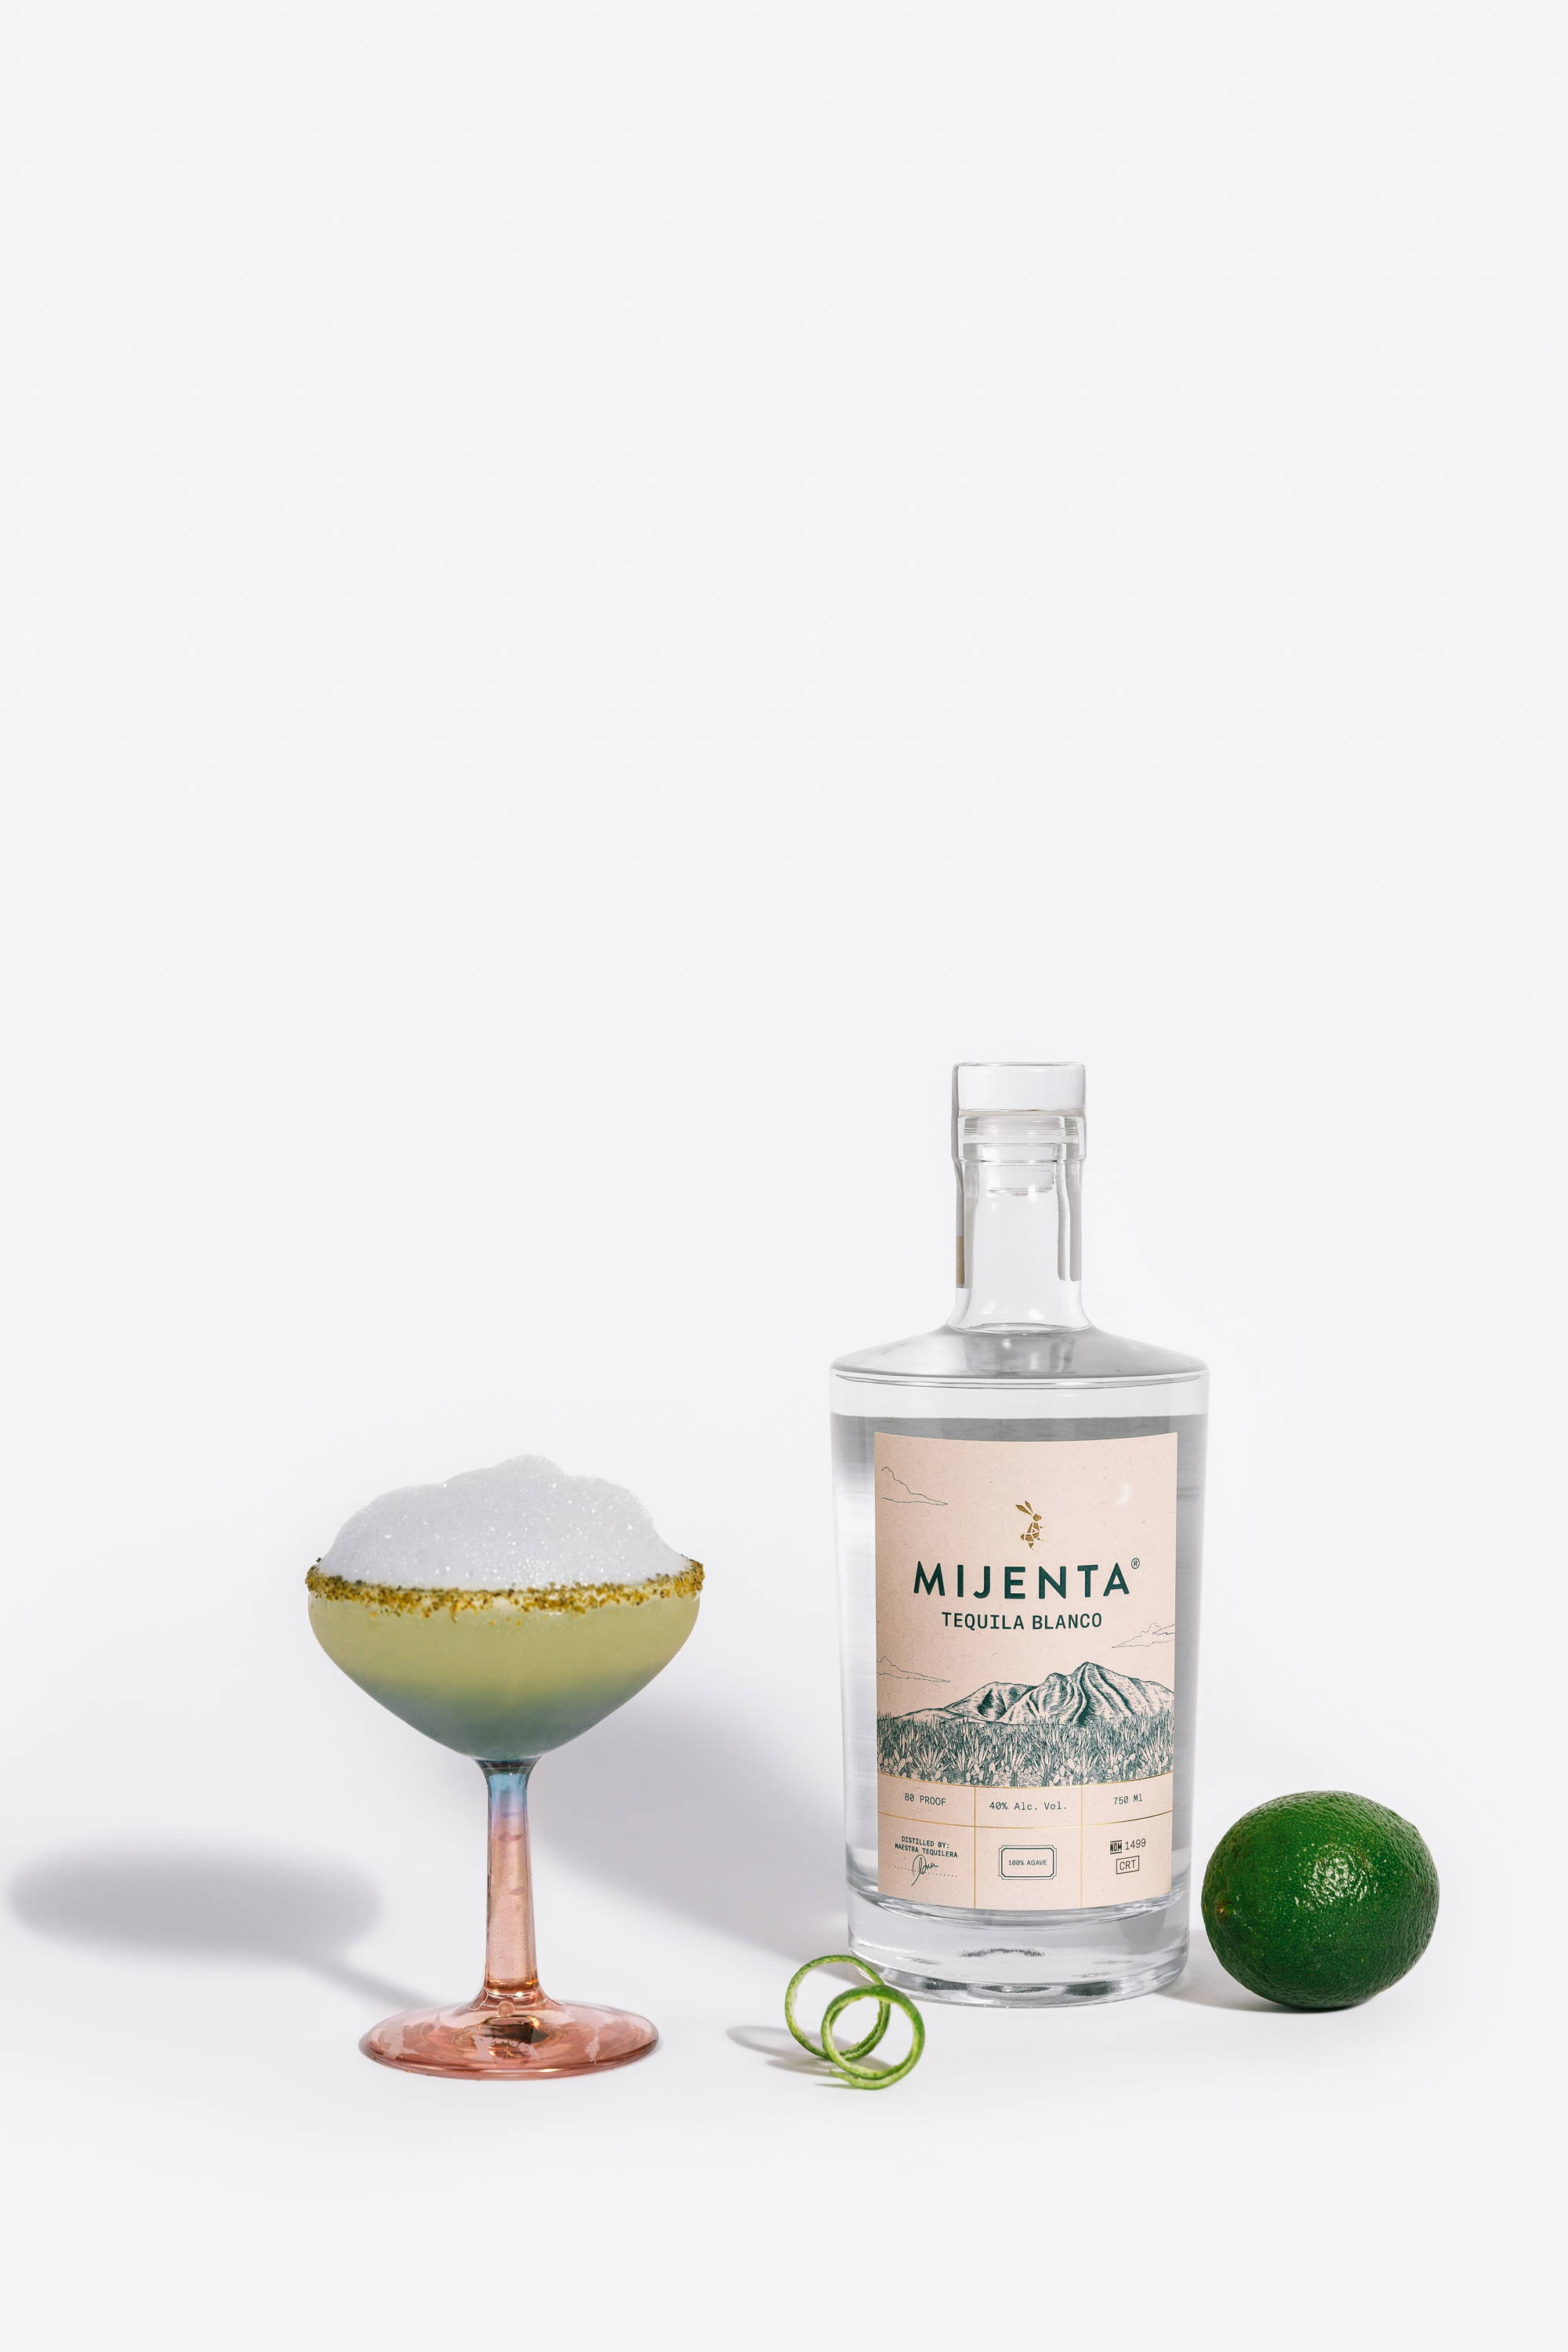 Mijenta's Margarita Cocktail